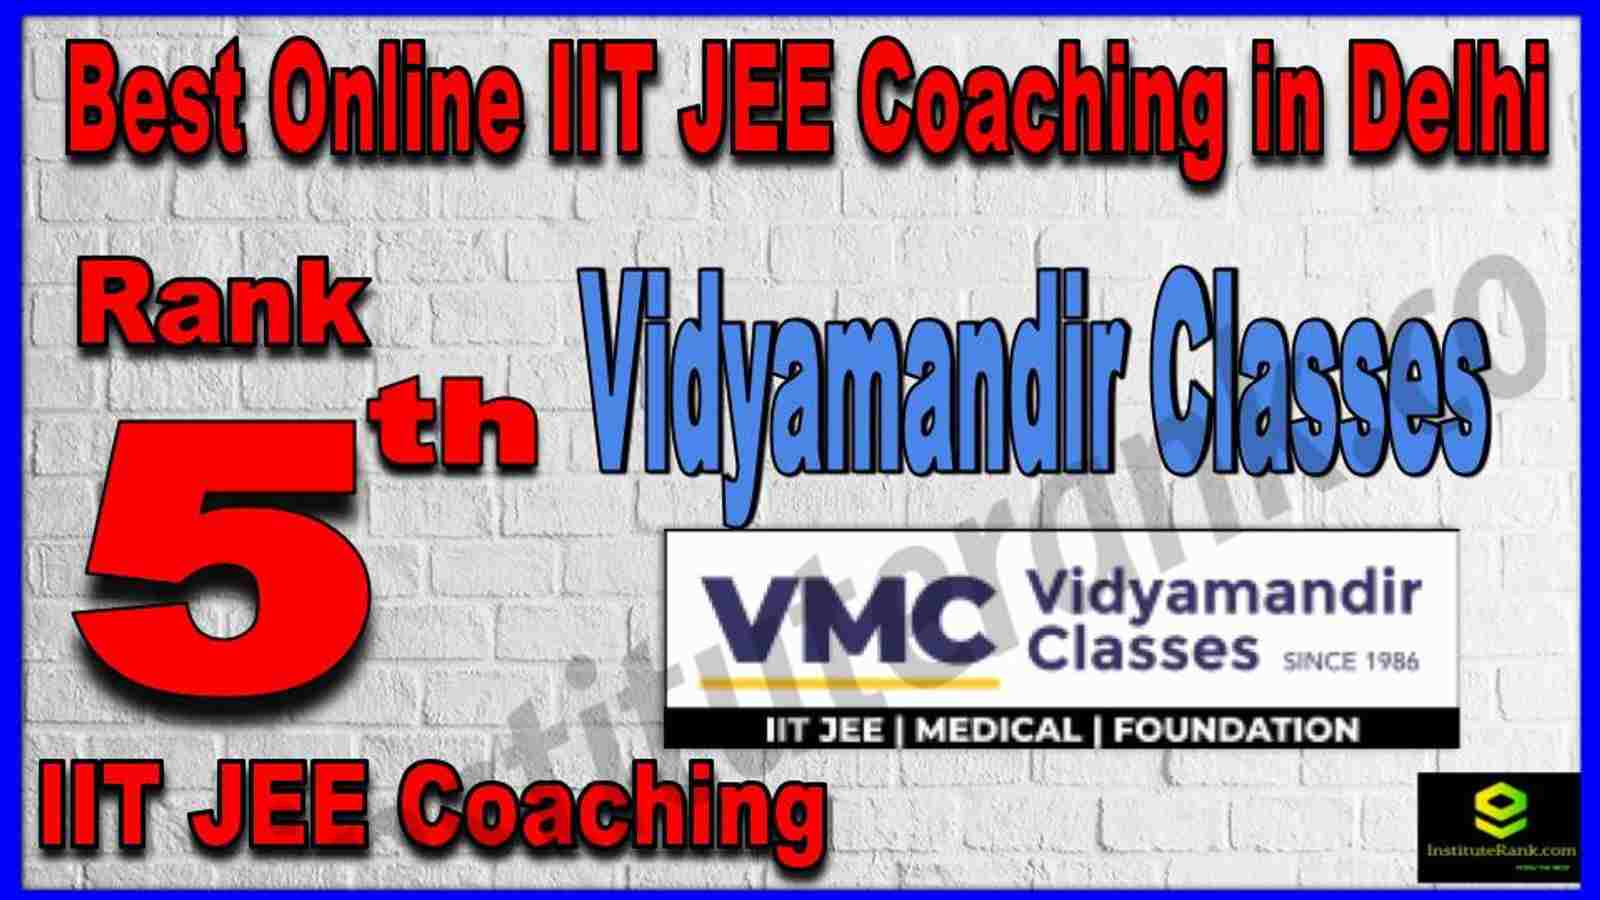 Rank 5th Best Online IIT JEE Coaching in Delhi